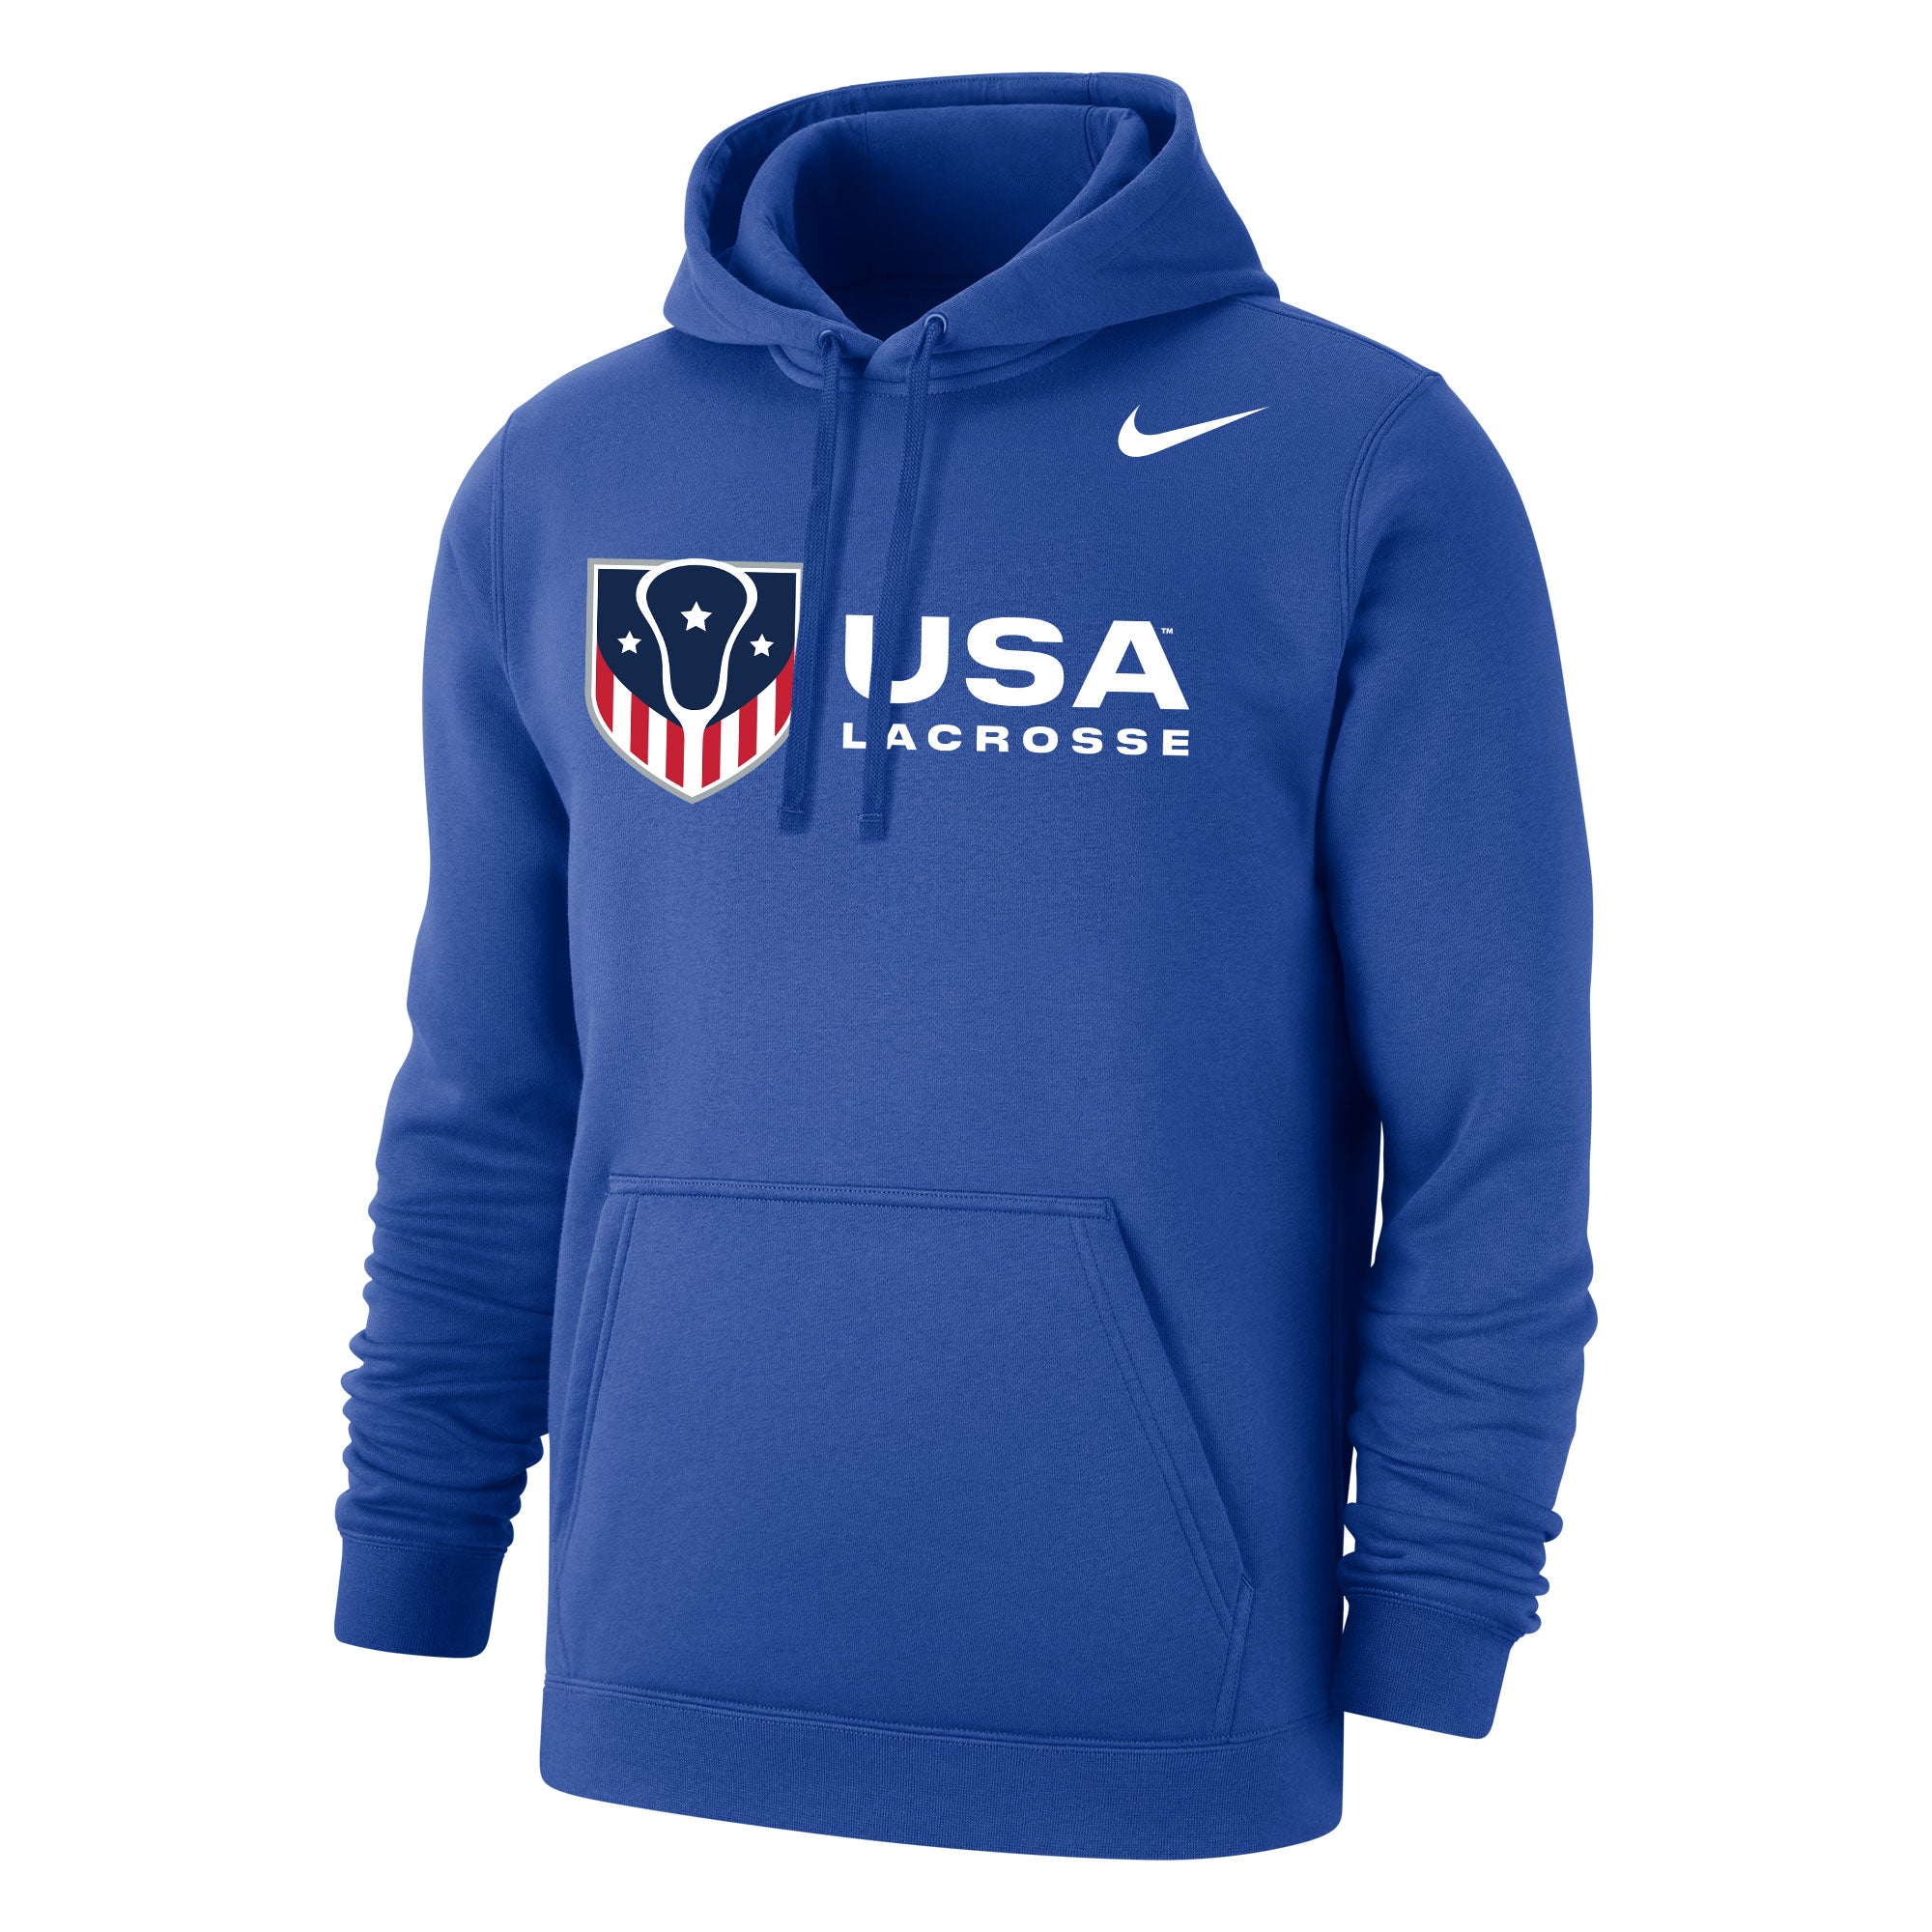 USA Lacrosse Nike Club Fleece Hoodie